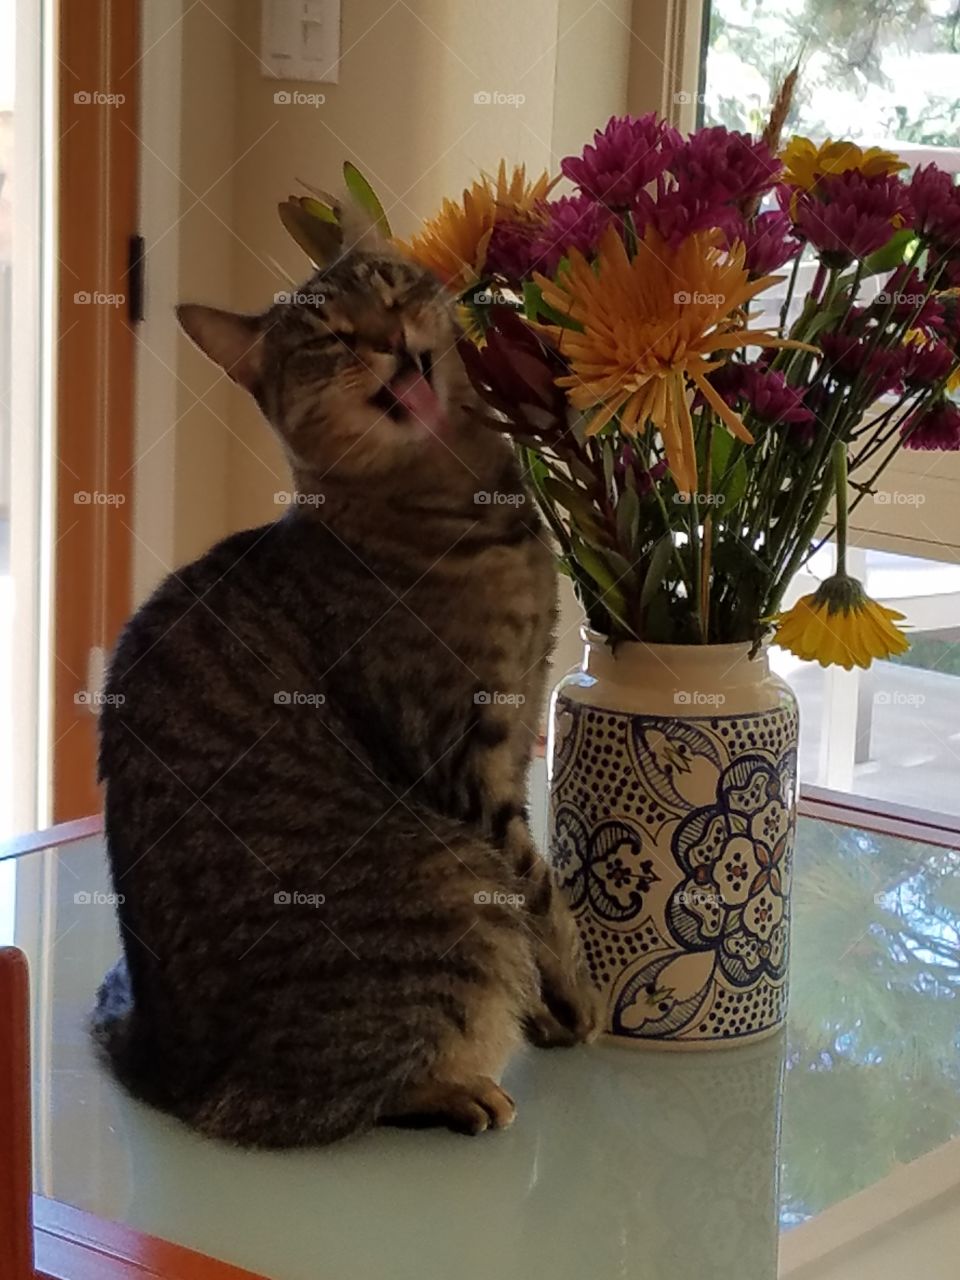 Cat sticking out tongue near flower pot